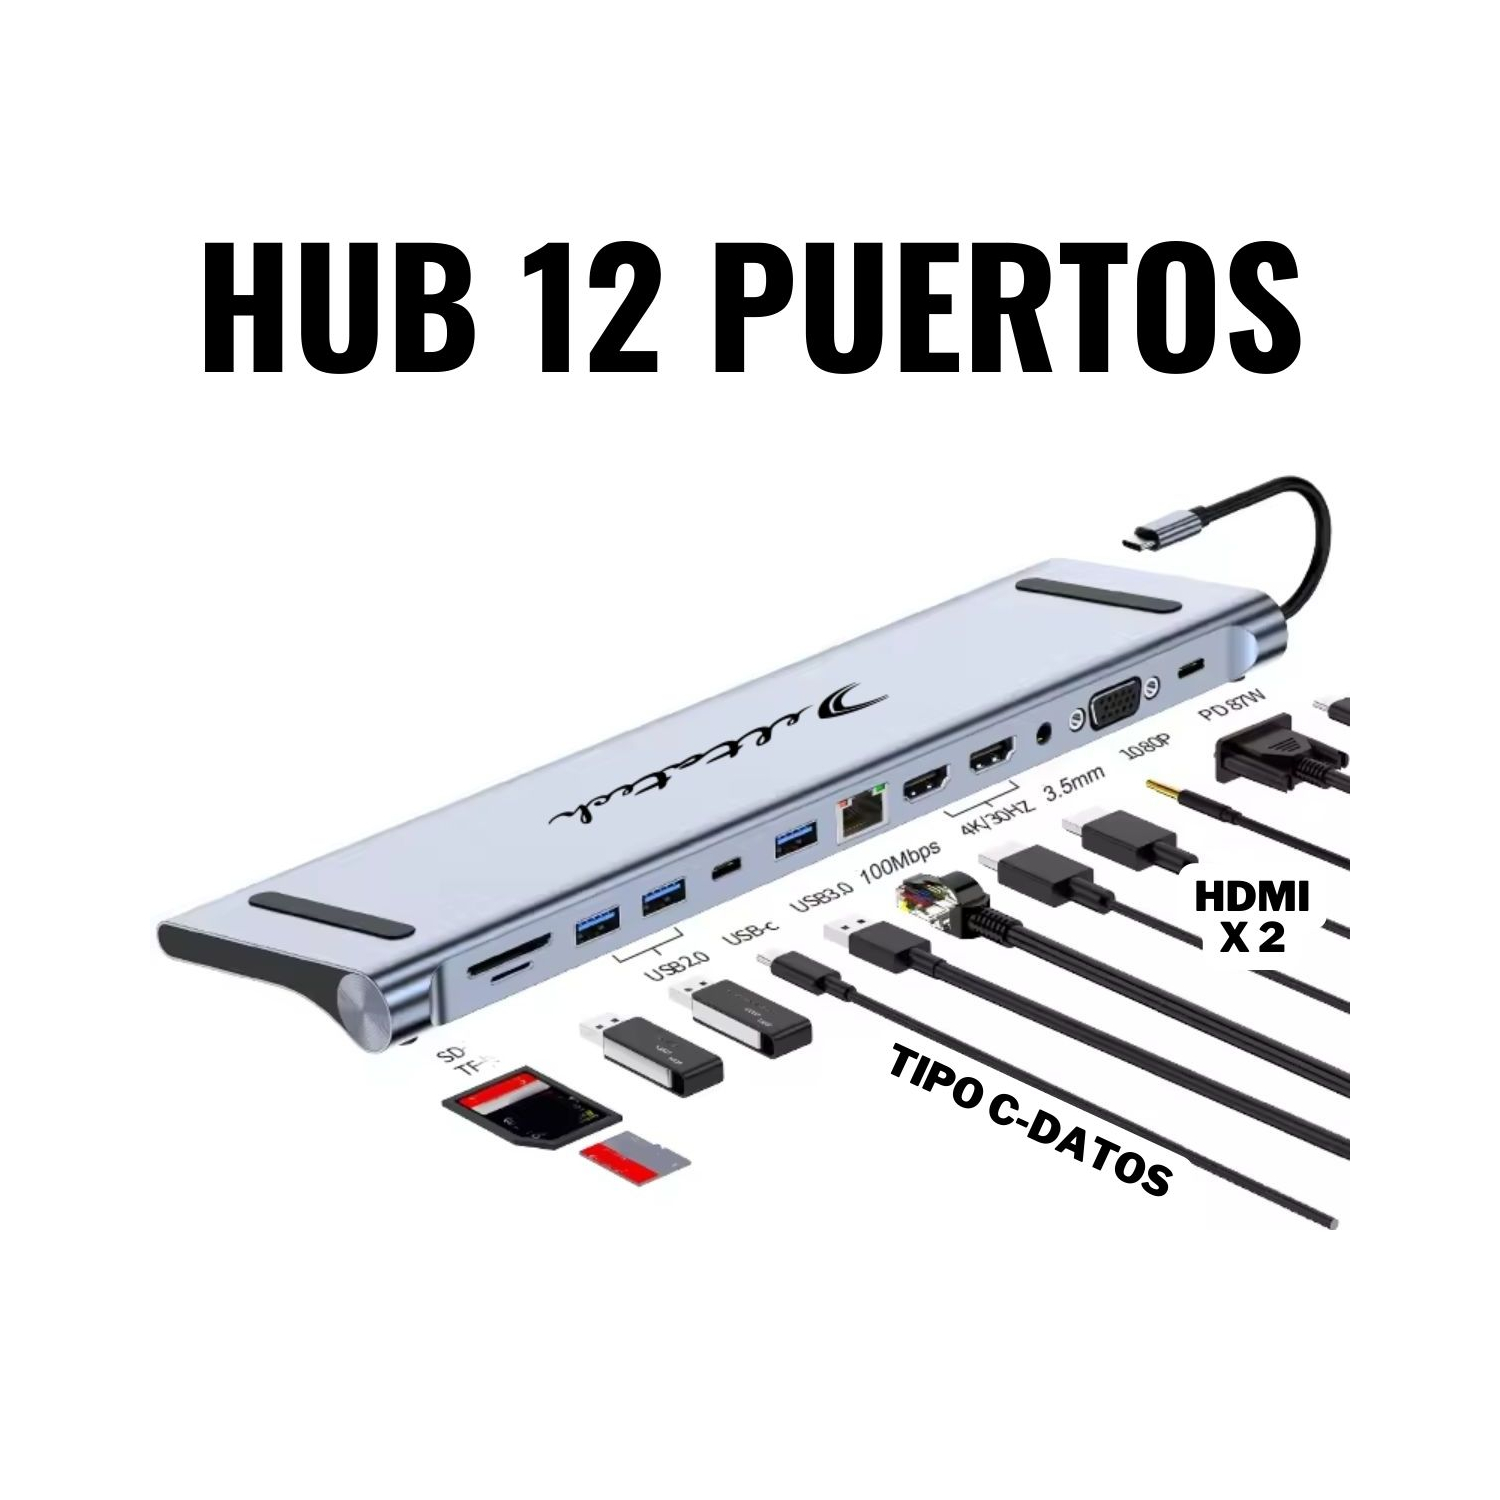 VC-HUB USB TIPO C MOD. 2003U2 12 PUERTOS (HDMI*2+USB3.0+USB2.0*2+TIPO C-DATA+RJ45-100+PD+3.5+SD+TF)